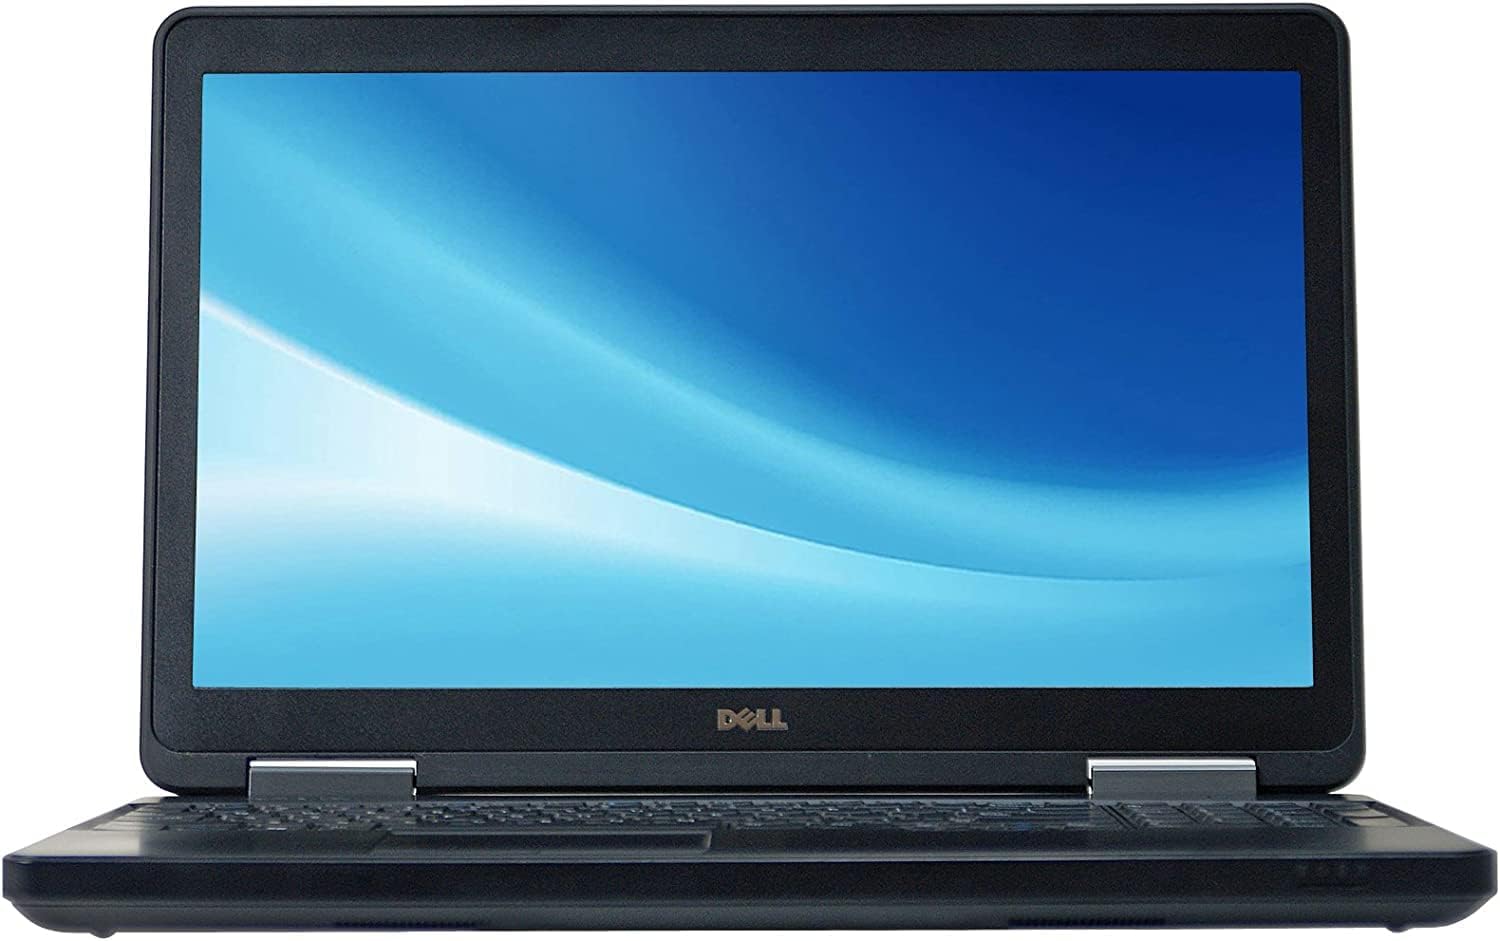 Refurbished Dell Latitude E5540 Laptop Computer, Intel Core i5, 8GB Ram, 500GB Hard Drive, Windows 10 Operating System